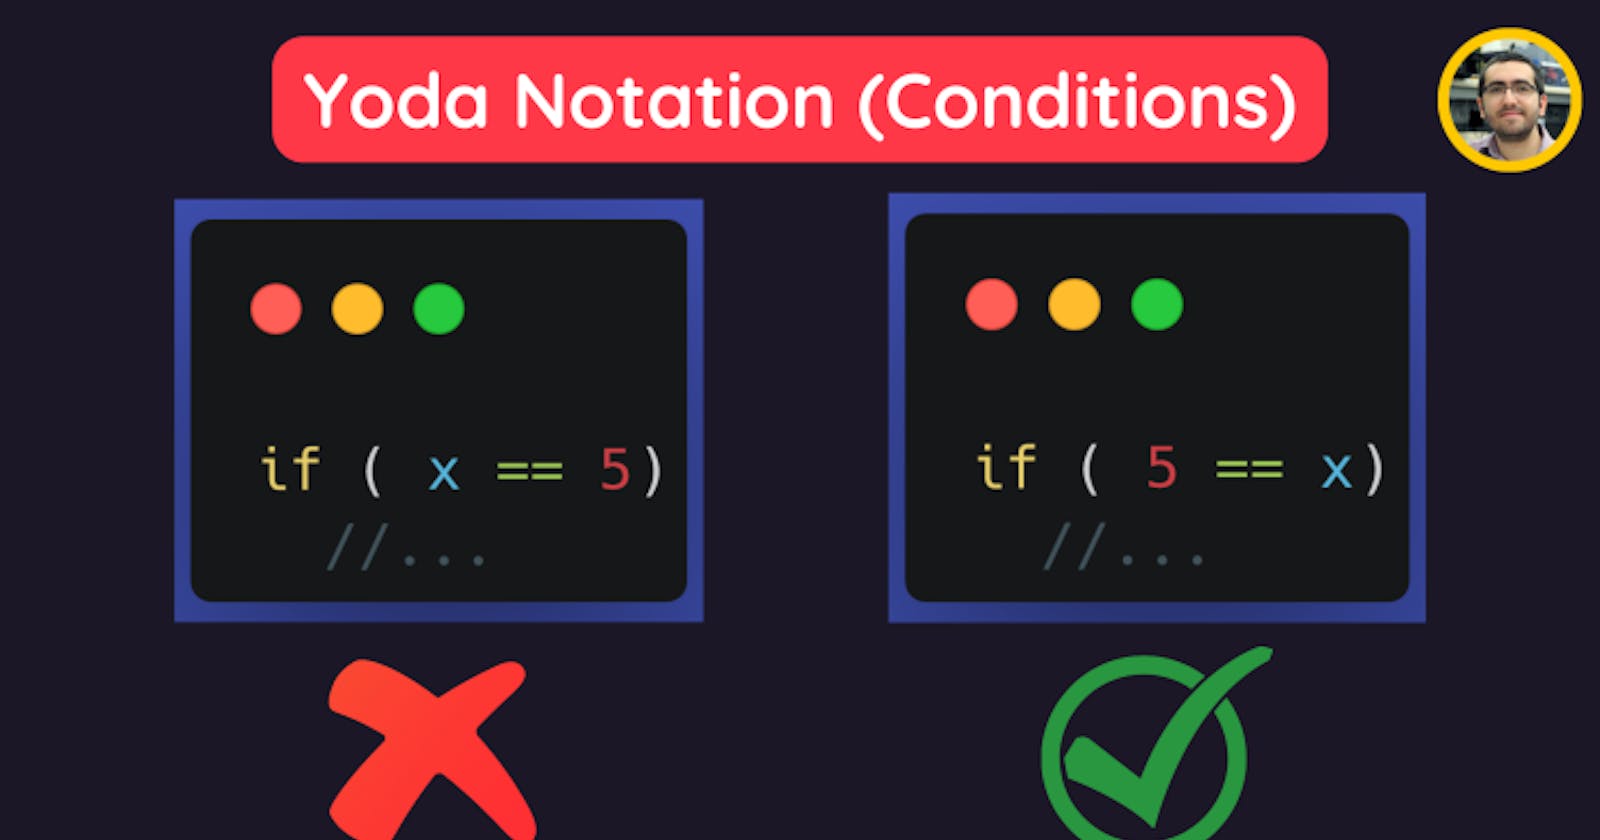 Yoda Notation